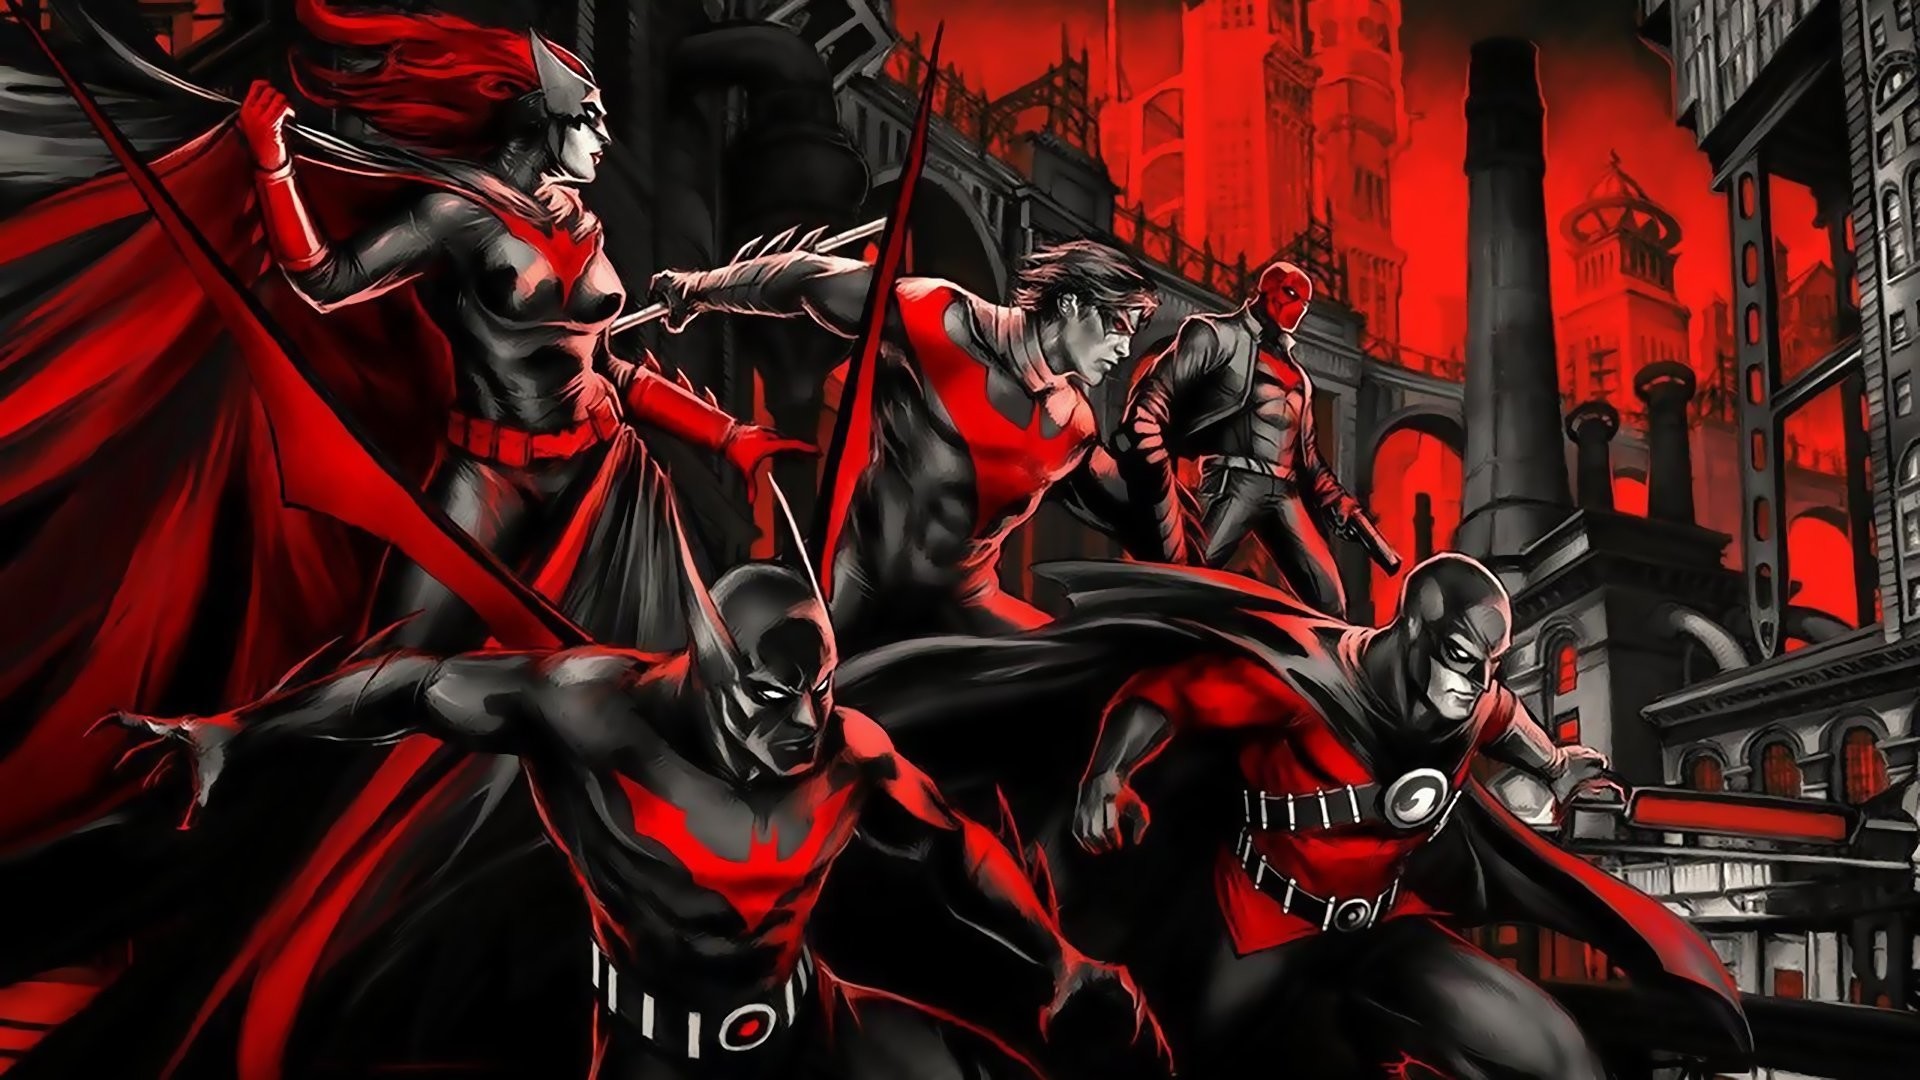 Batman beyond batwoman red robin nightwing red hood gotham red dc comics batman beyond betvumen red